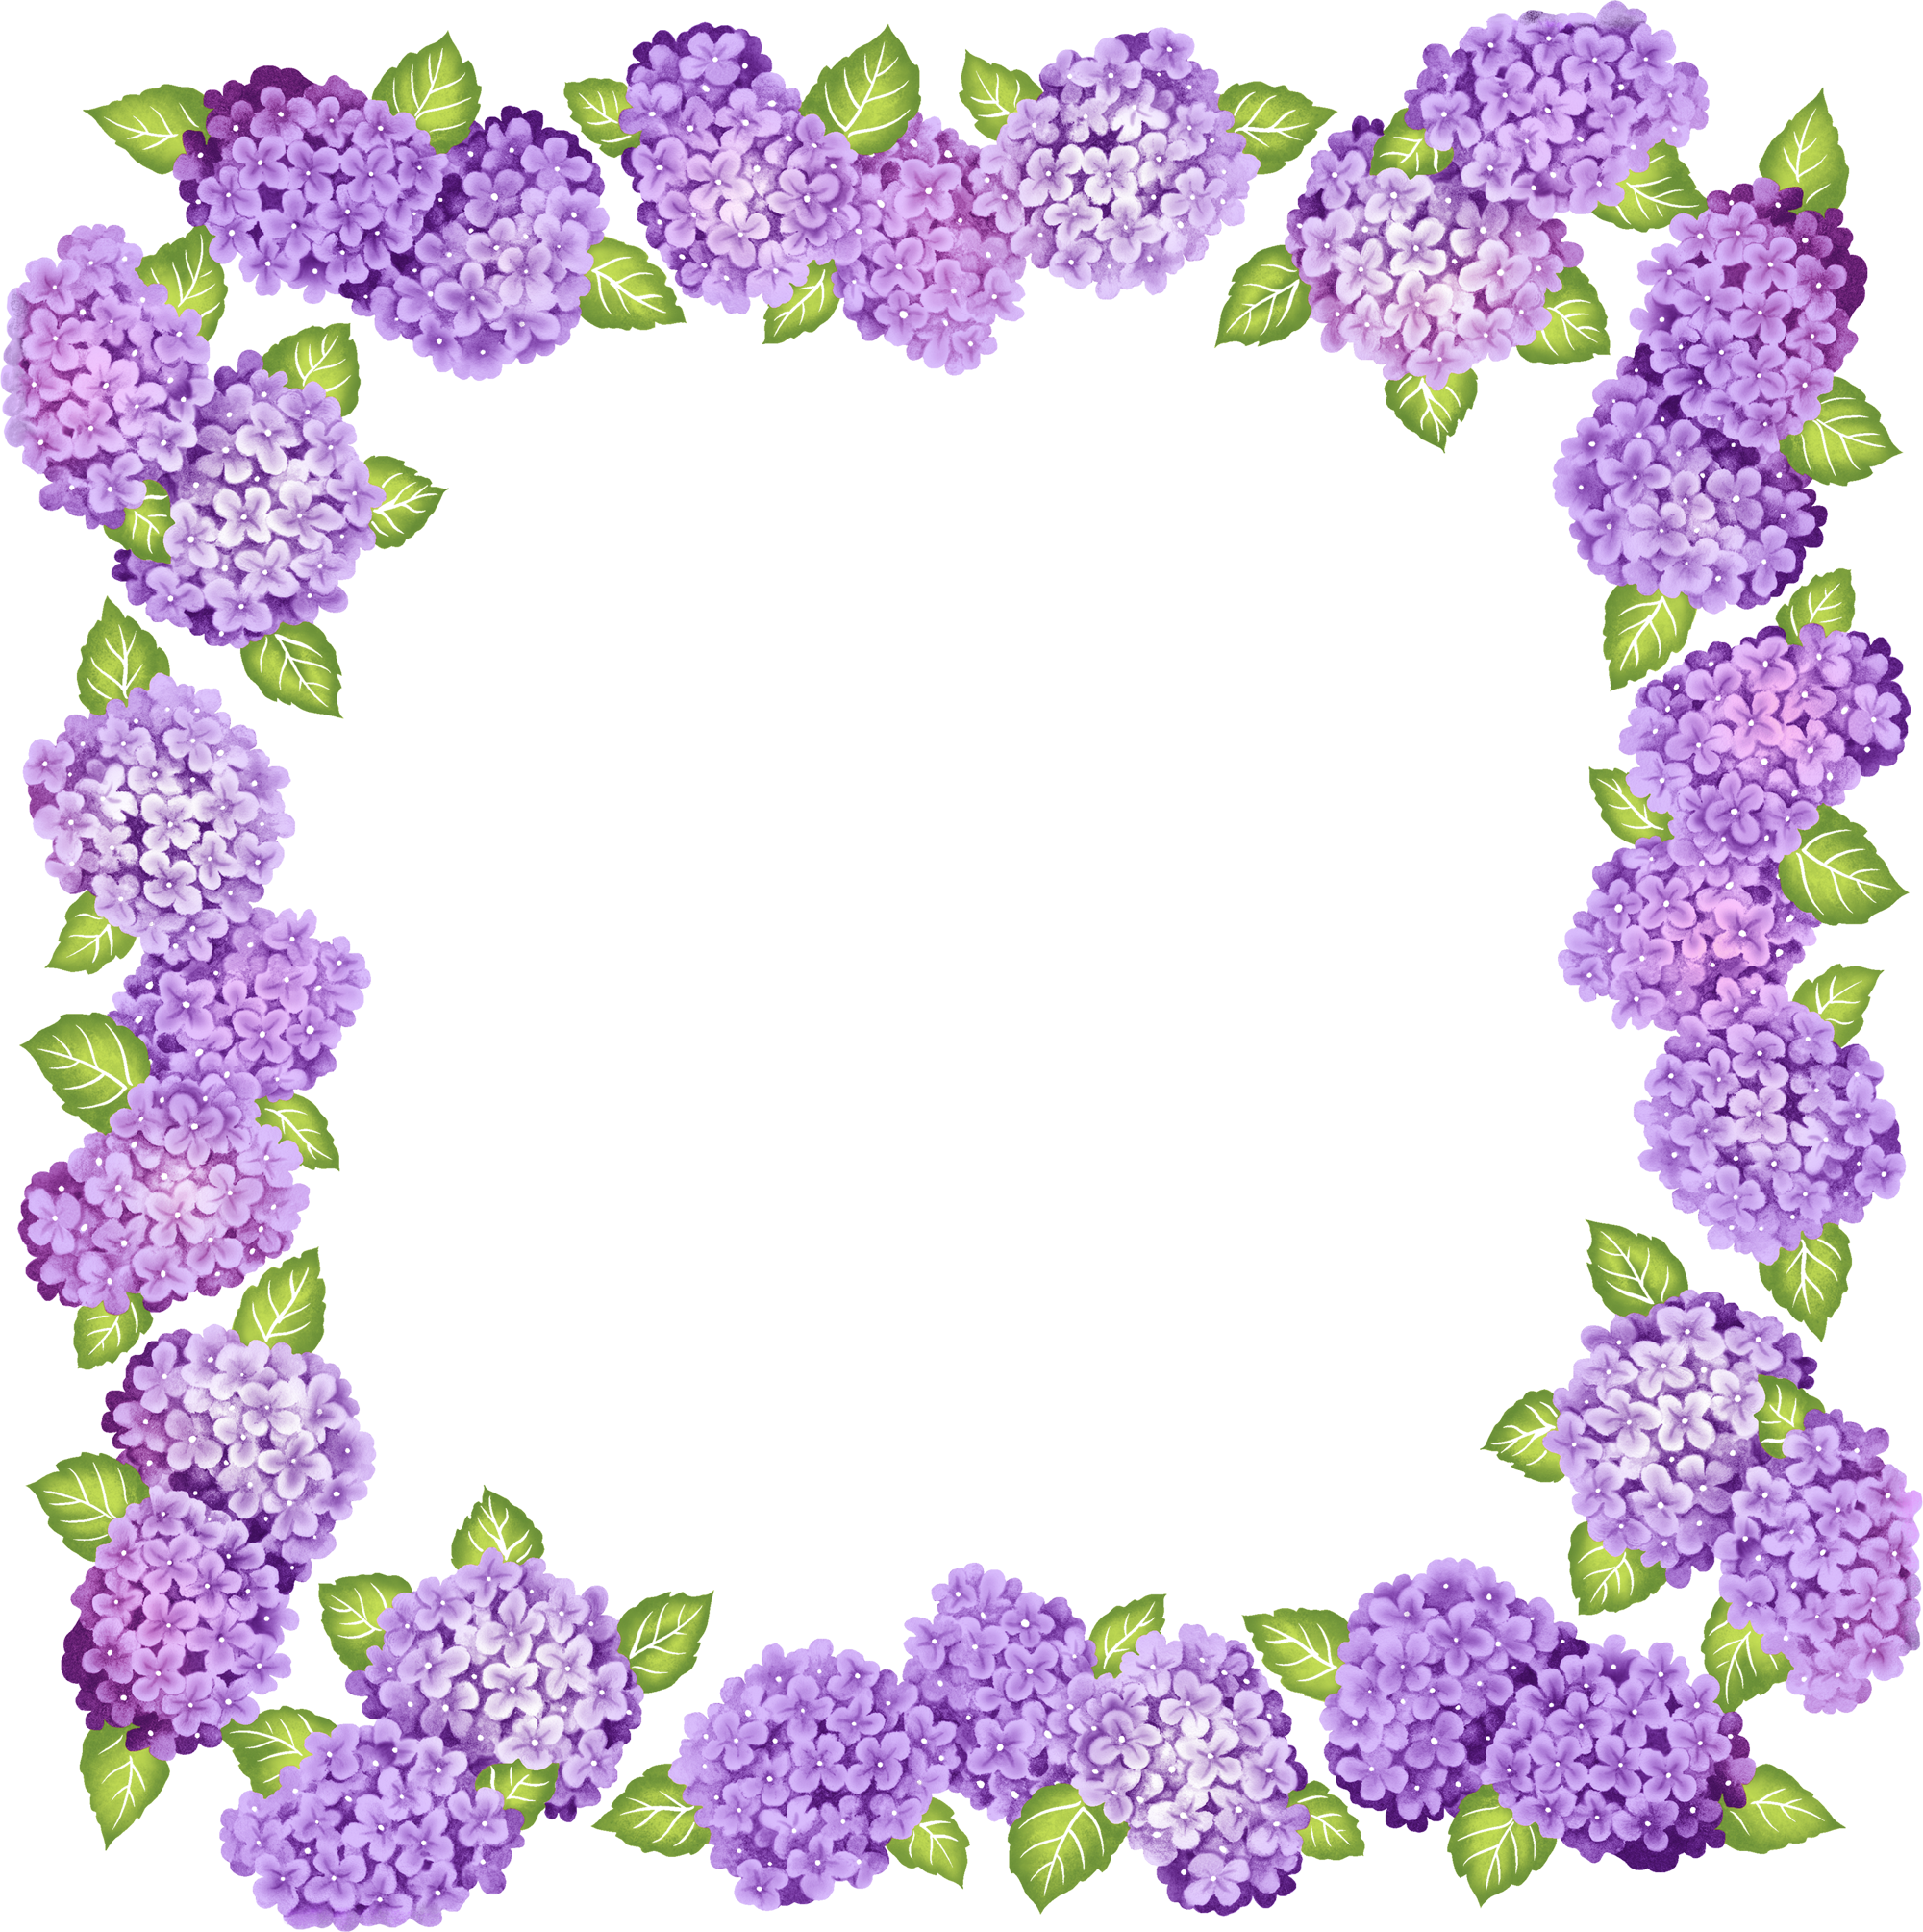 Flower frame, Polyvore and Flower